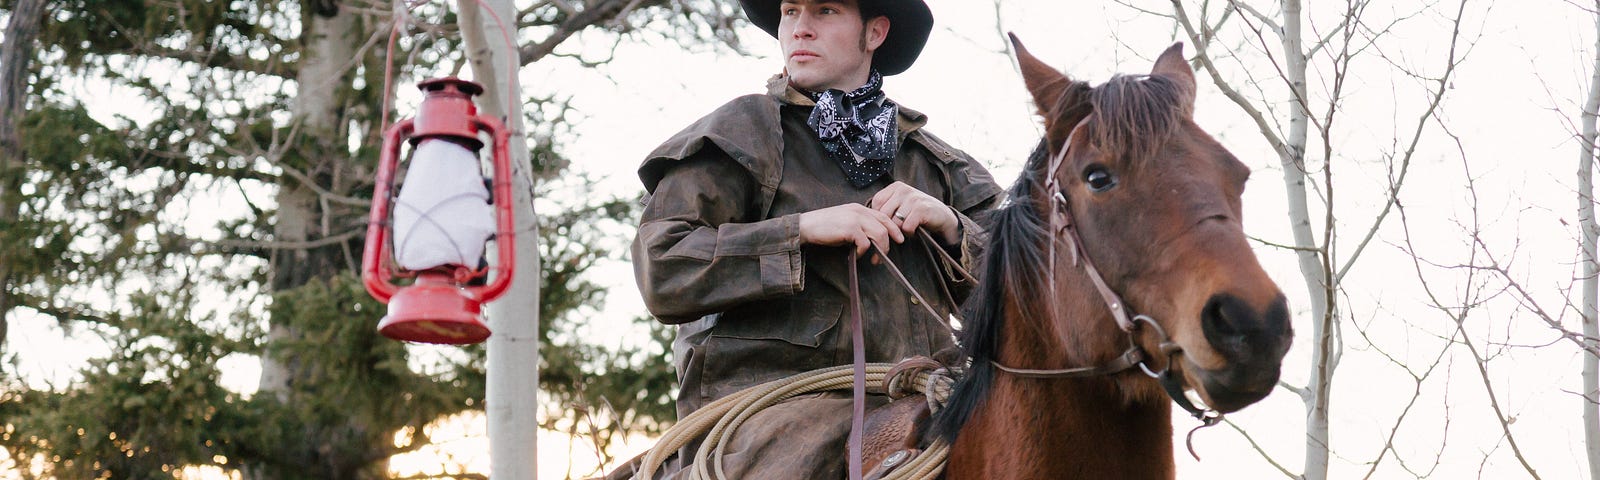 cowboy wearing leather rain gear riding a chestnut horse